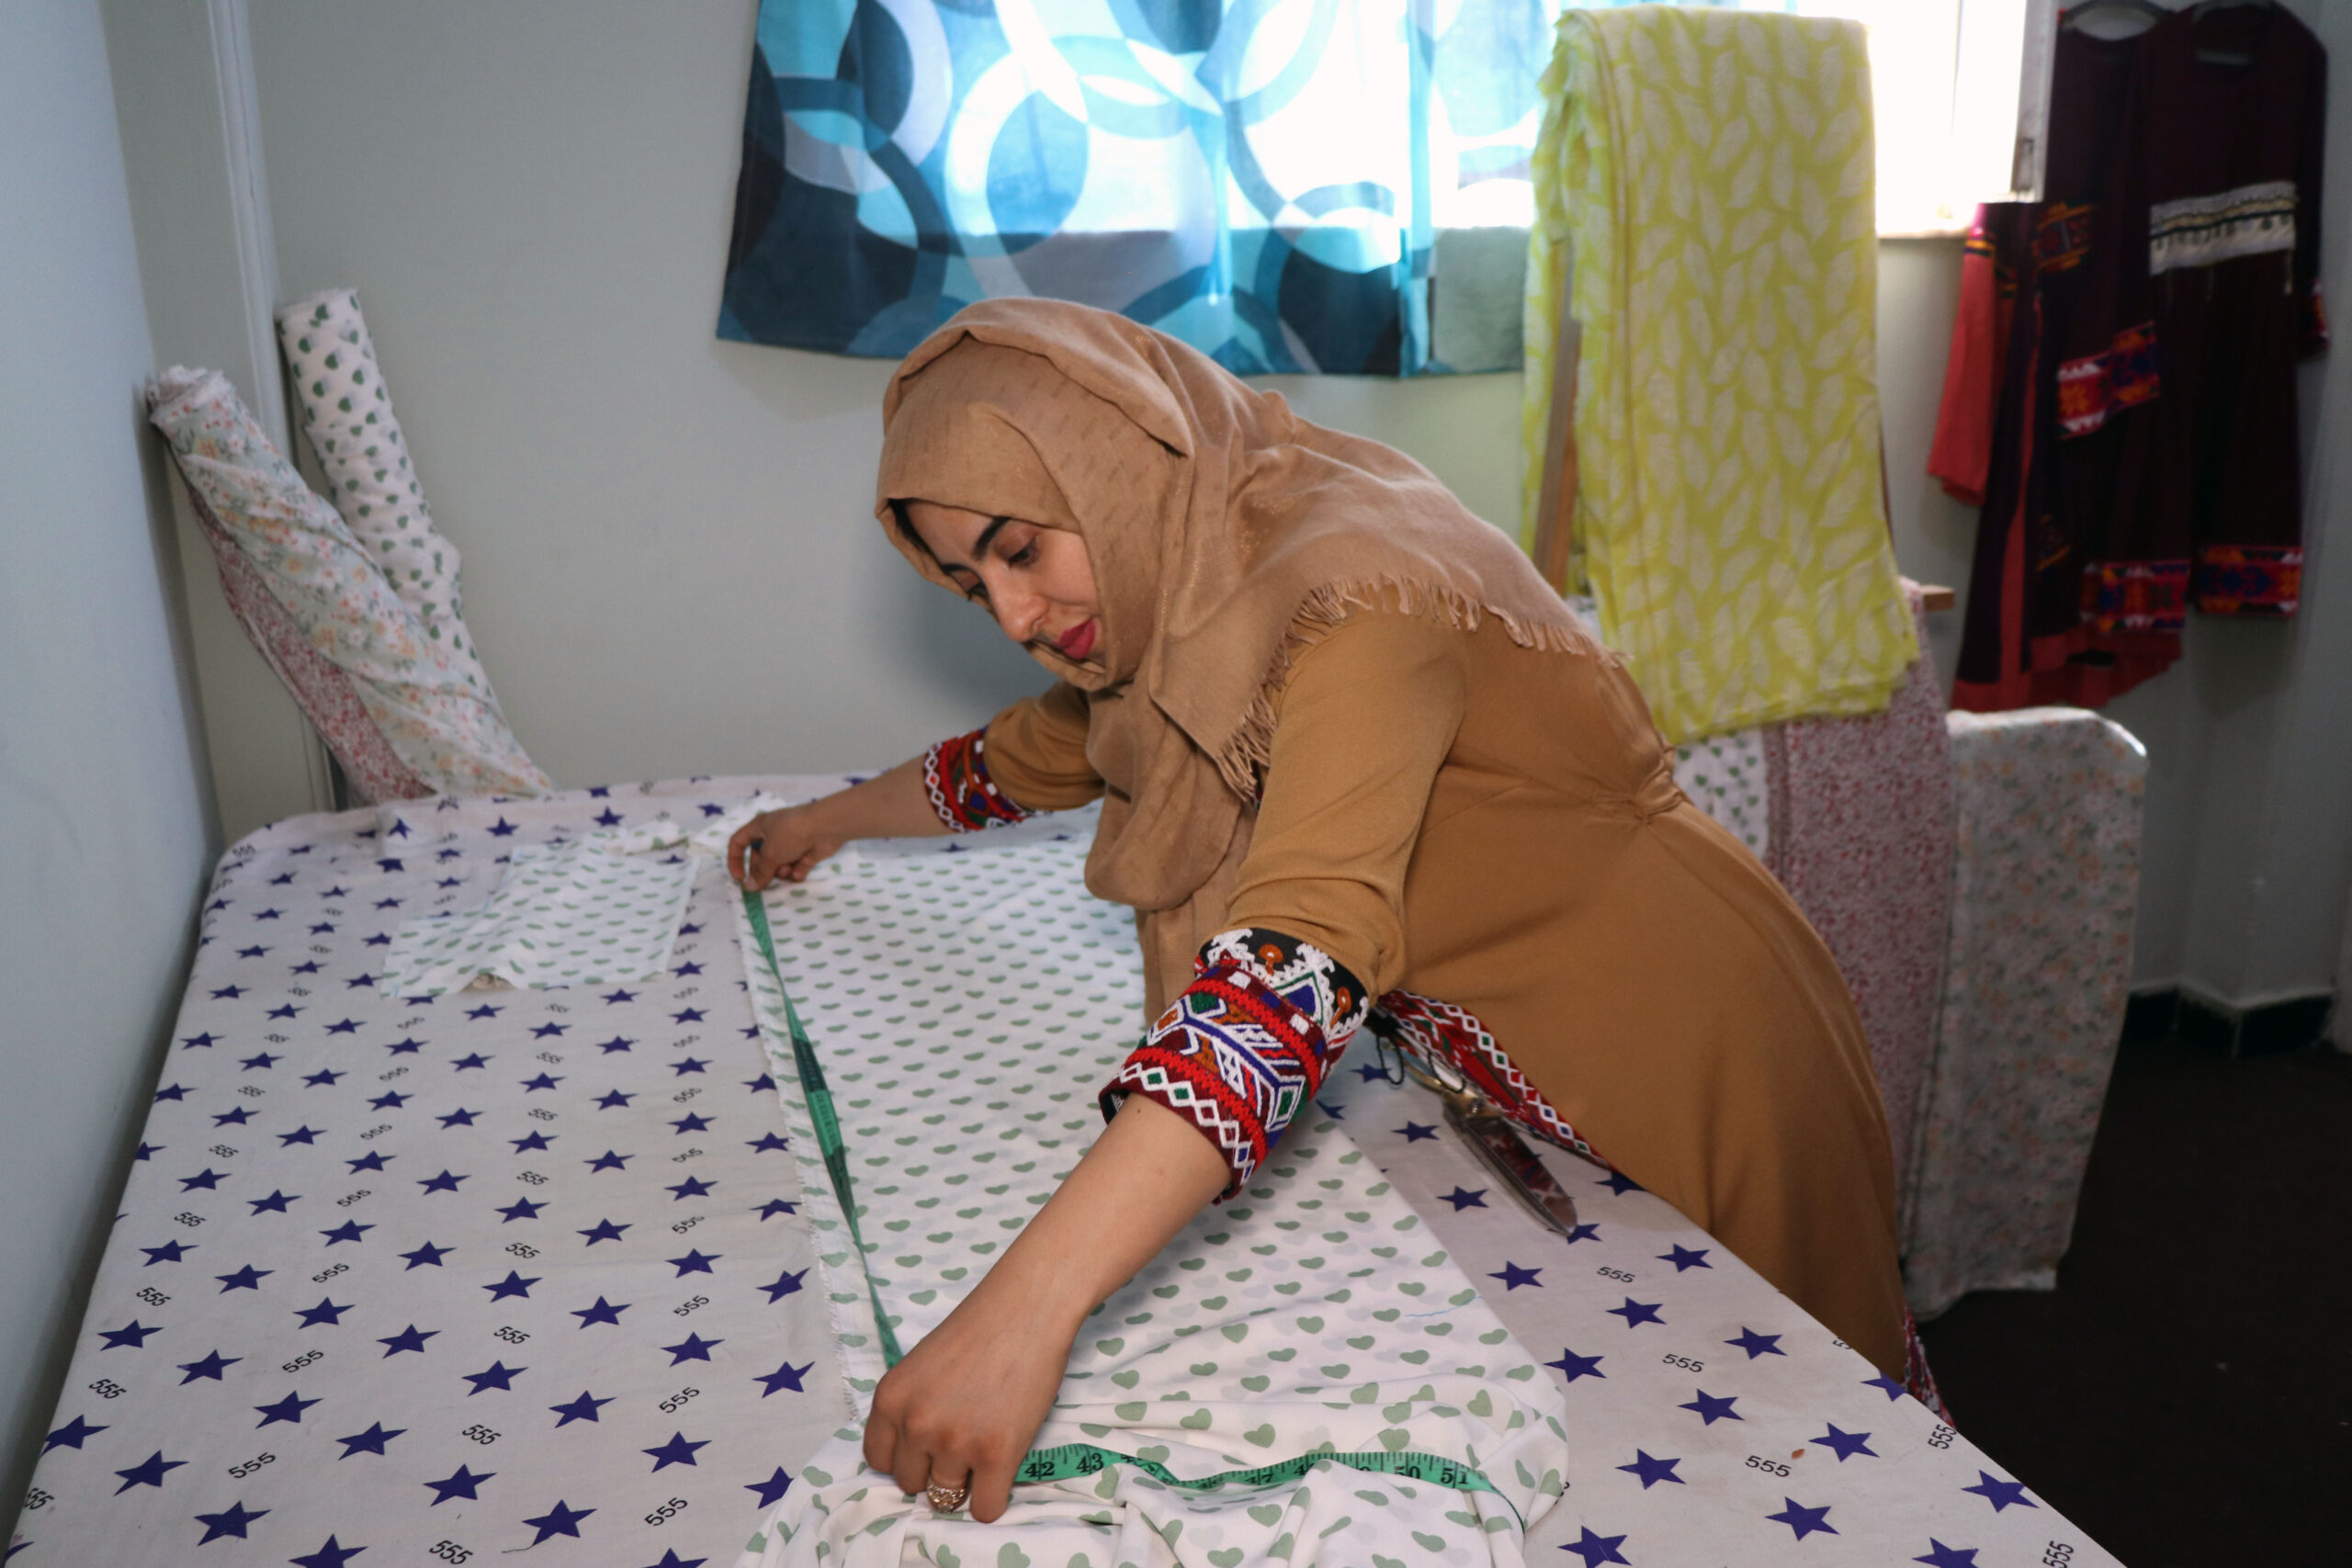 Kabul-based woman entrepreneur seeks govt support